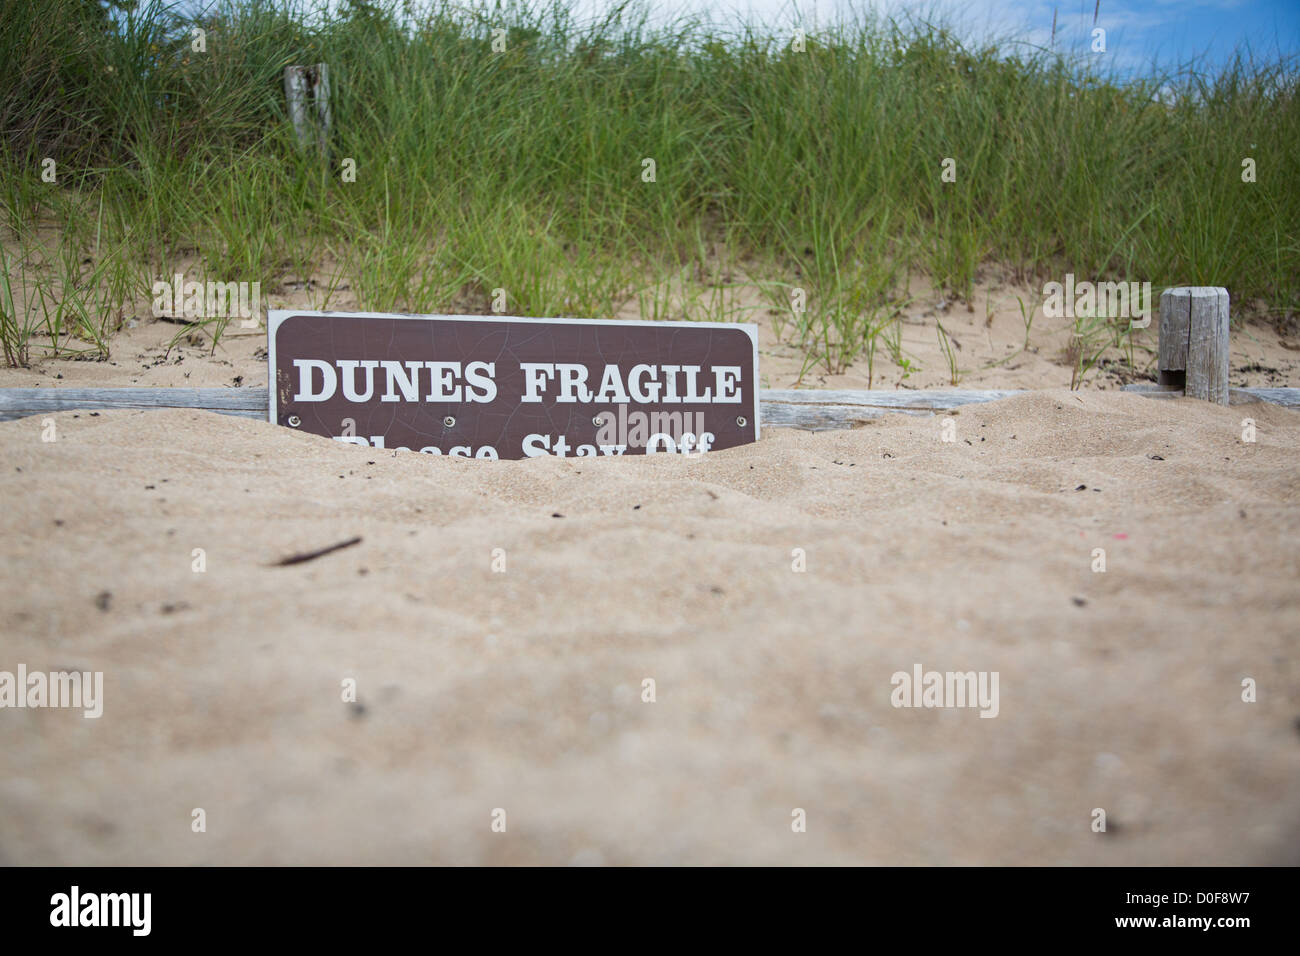 Las dunas son frágiles sign - Stay off Foto de stock